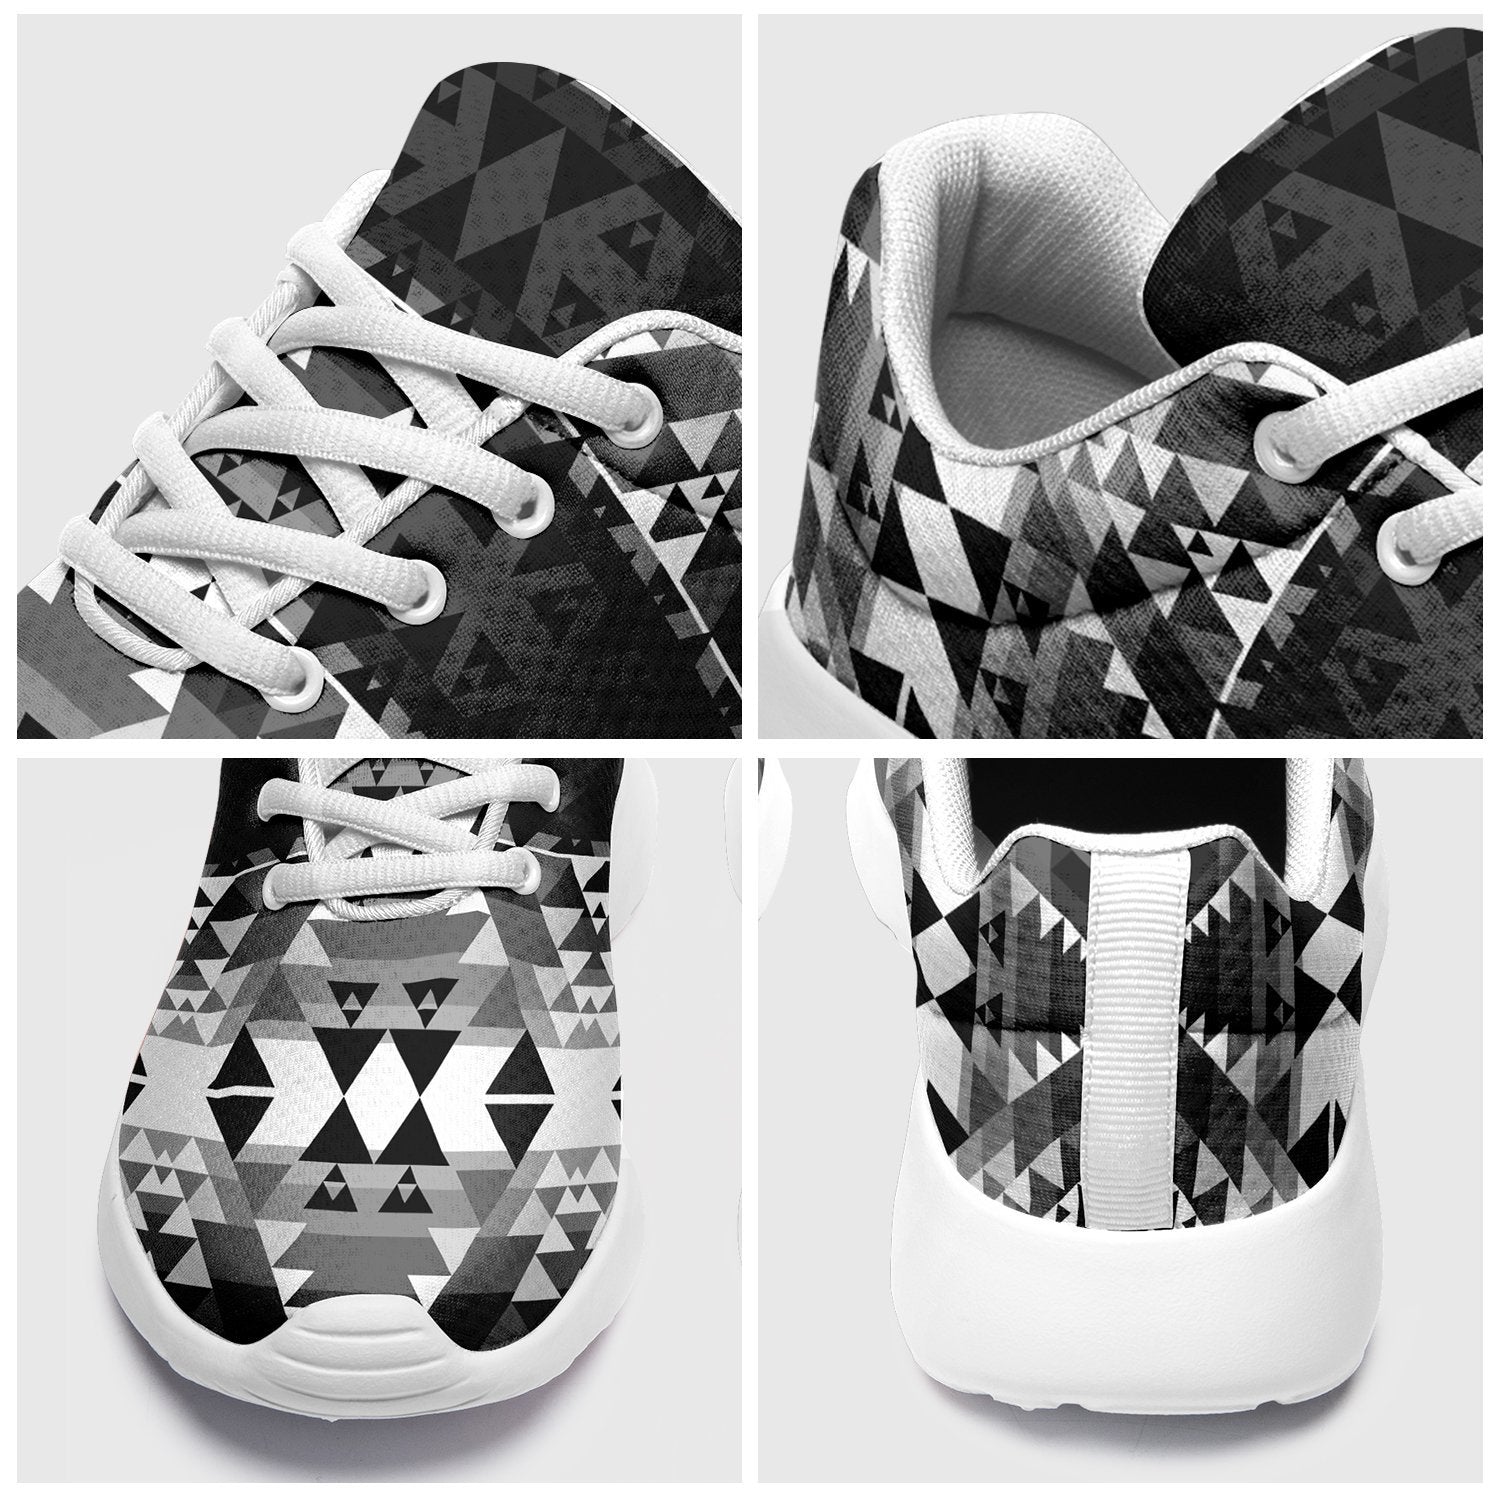 Writing on Stone Black and White Ikkaayi Sport Sneakers 49 Dzine 